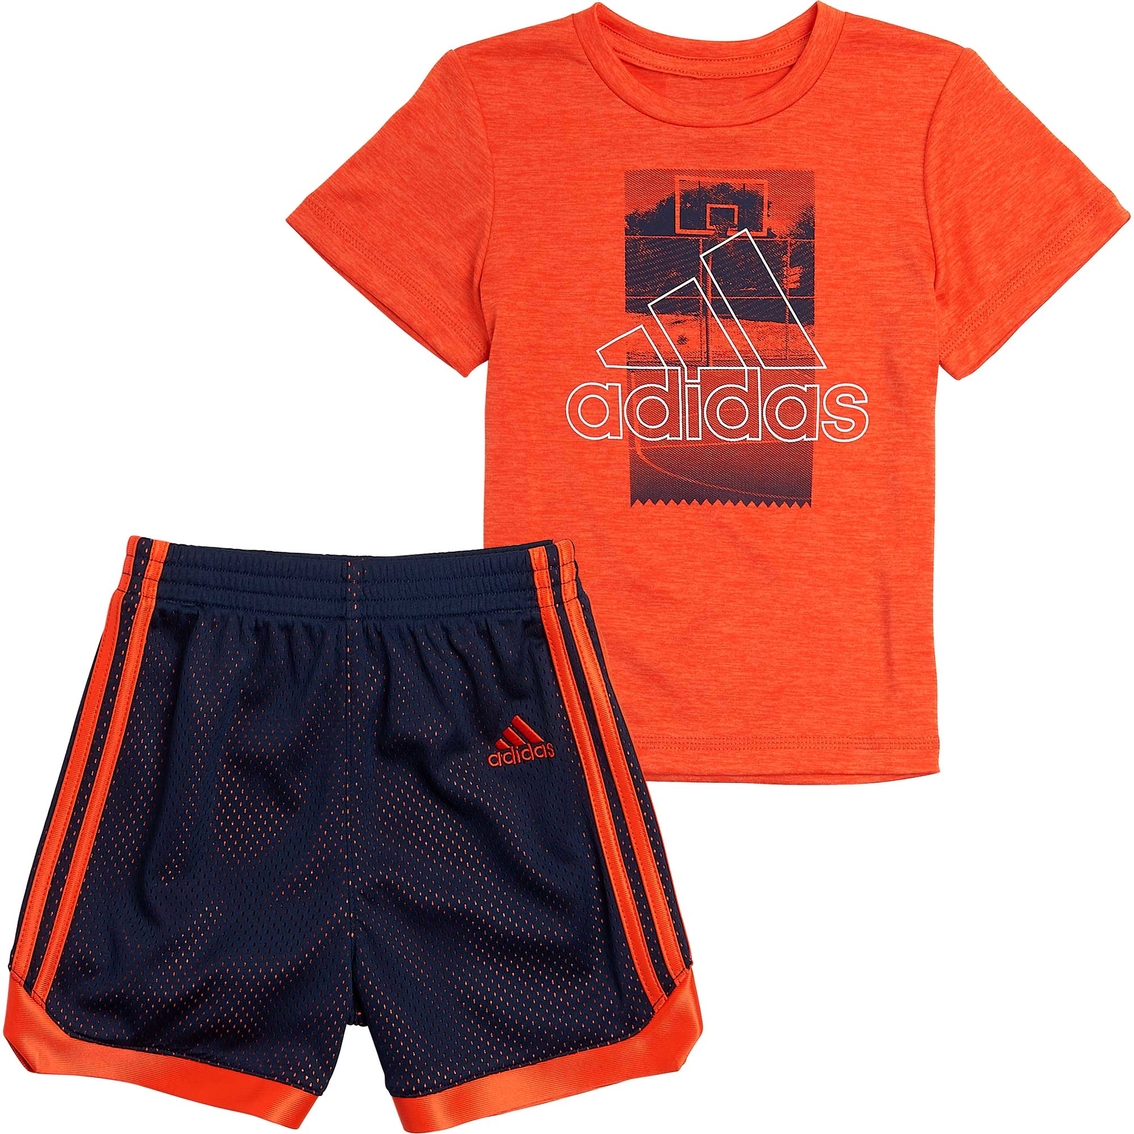 Adidas Infant Boys Mesh 2 Pc. Shorts 